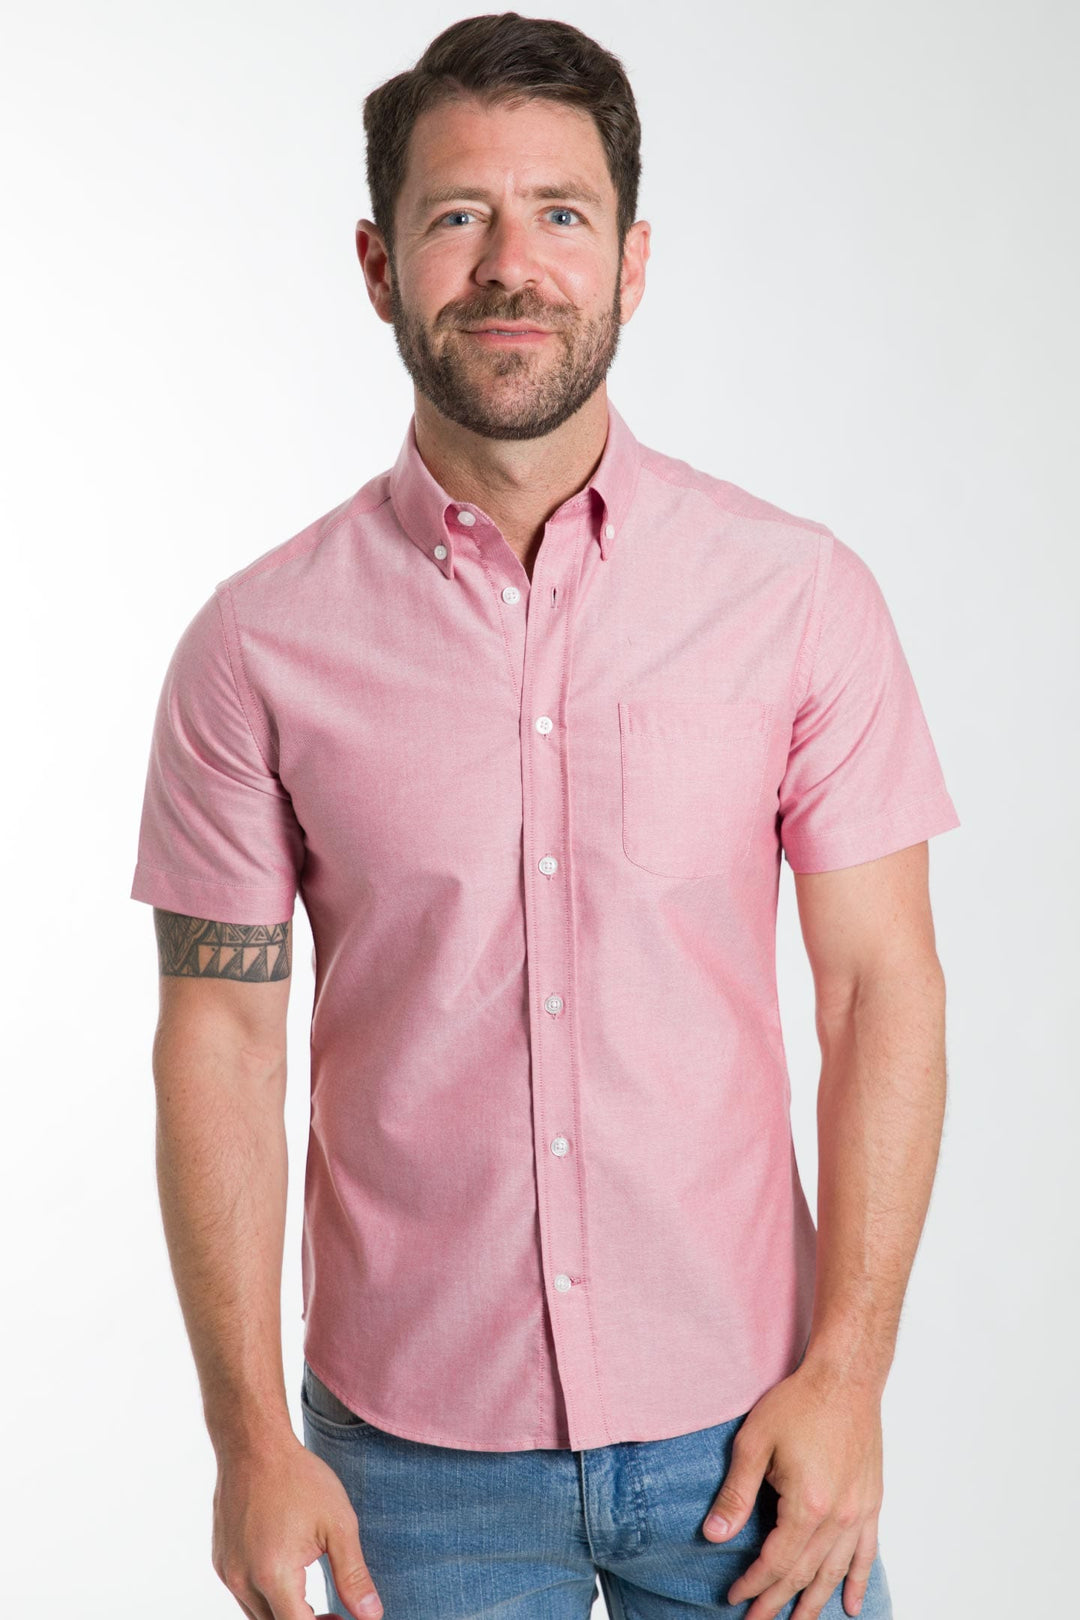 Buy Brick Oxford Wrinkle Free Short Sleeve Shirt for Short Men | Ash & Erie   Short Sleeve Everyday Shirts